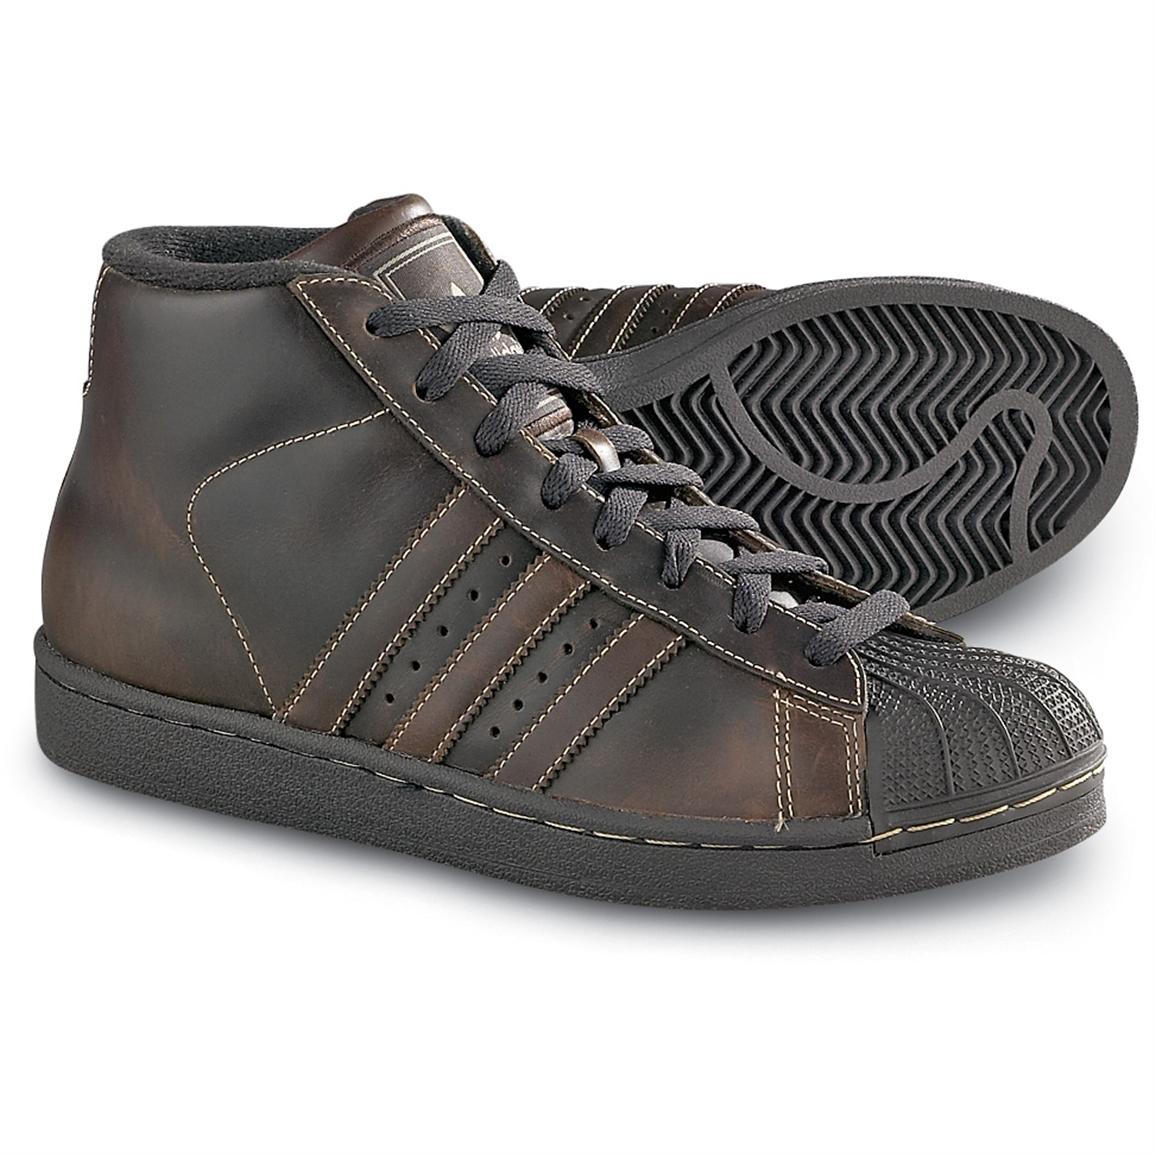 Men's Adidas® Pro Model Retro Hi-tops, Brown - 92318, Running Shoes